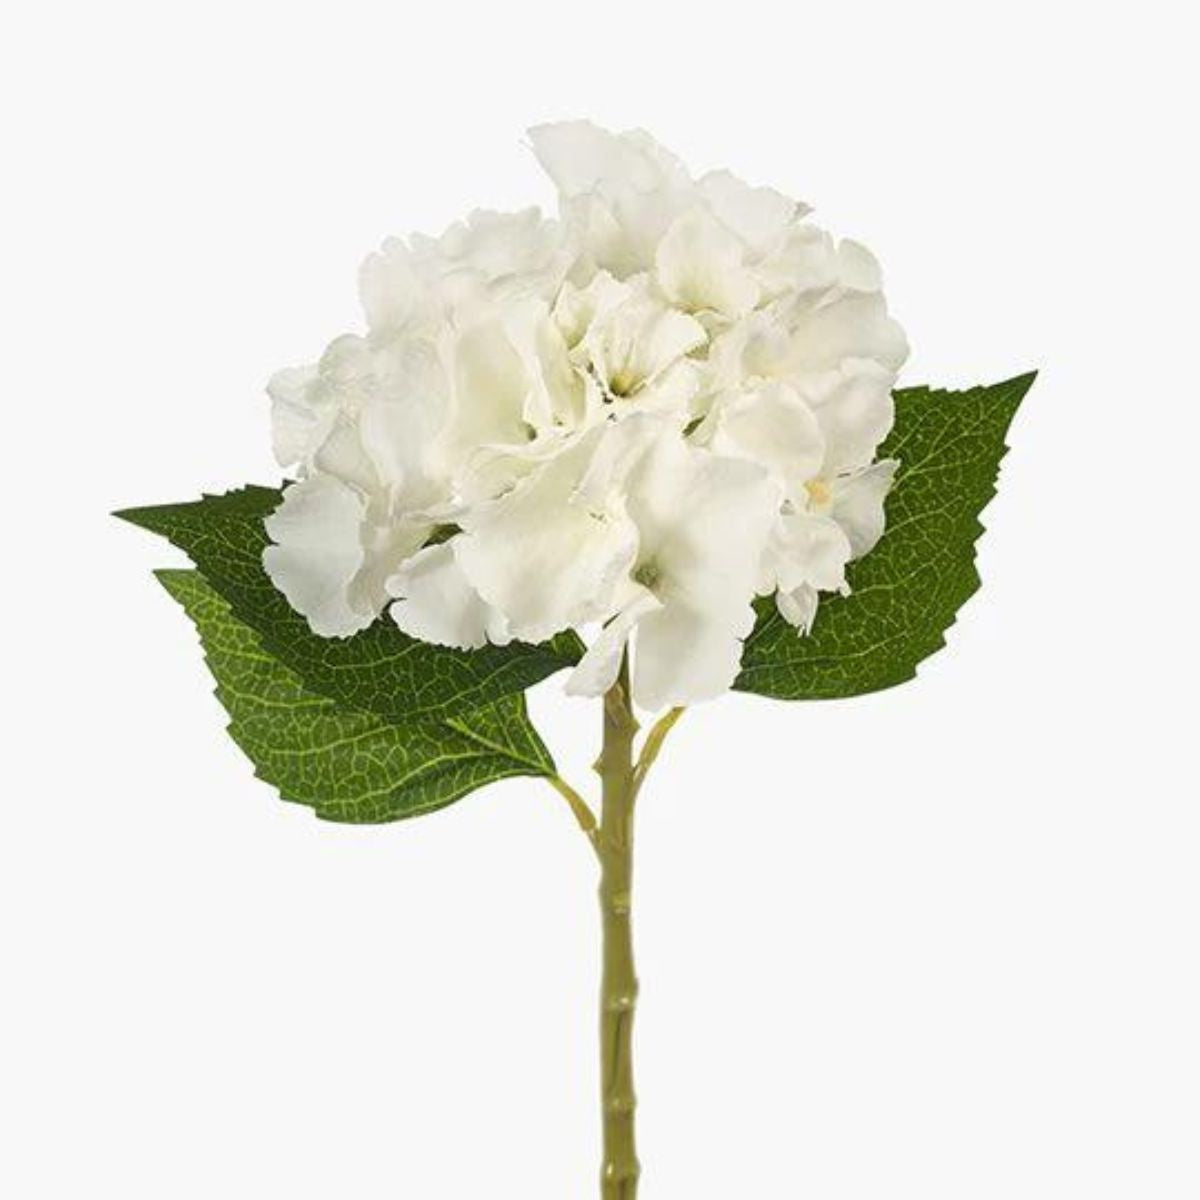 Hydrangea Stem - White